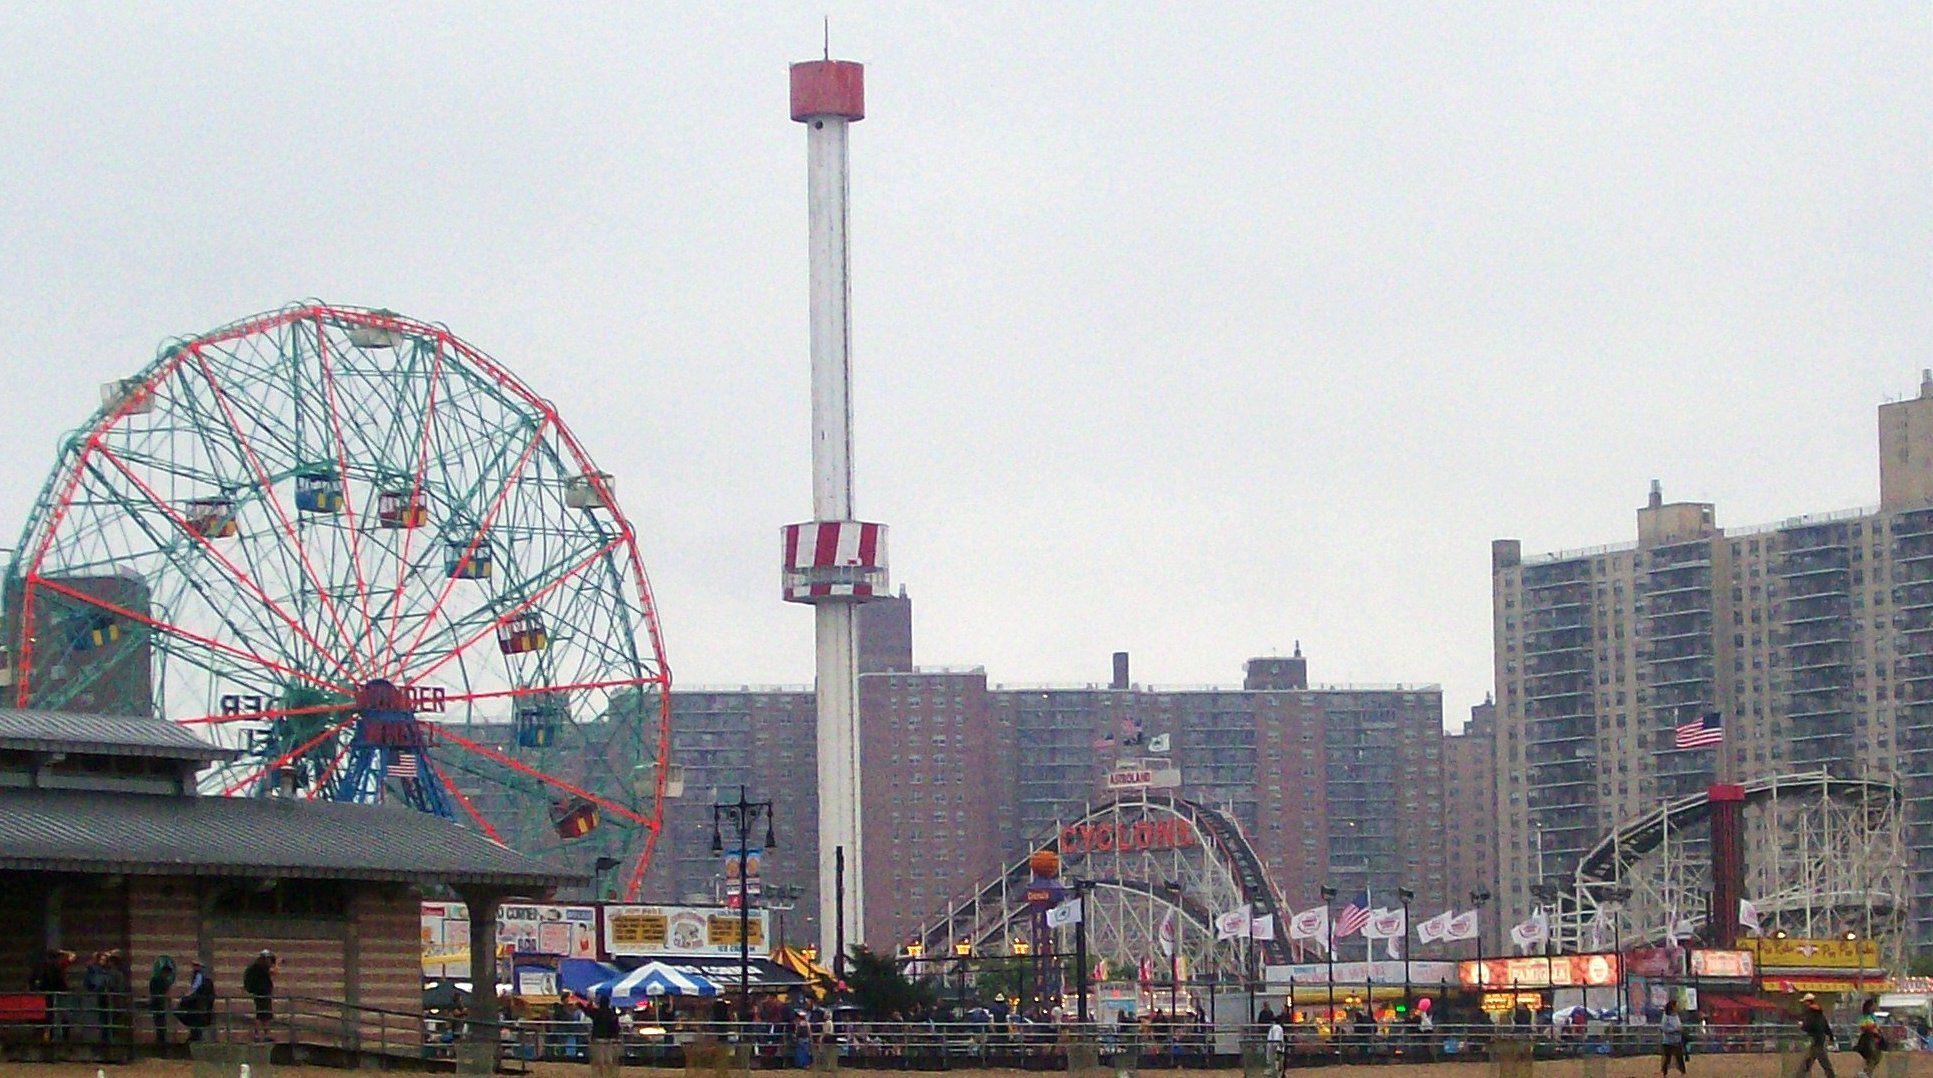 Coney Island 2009